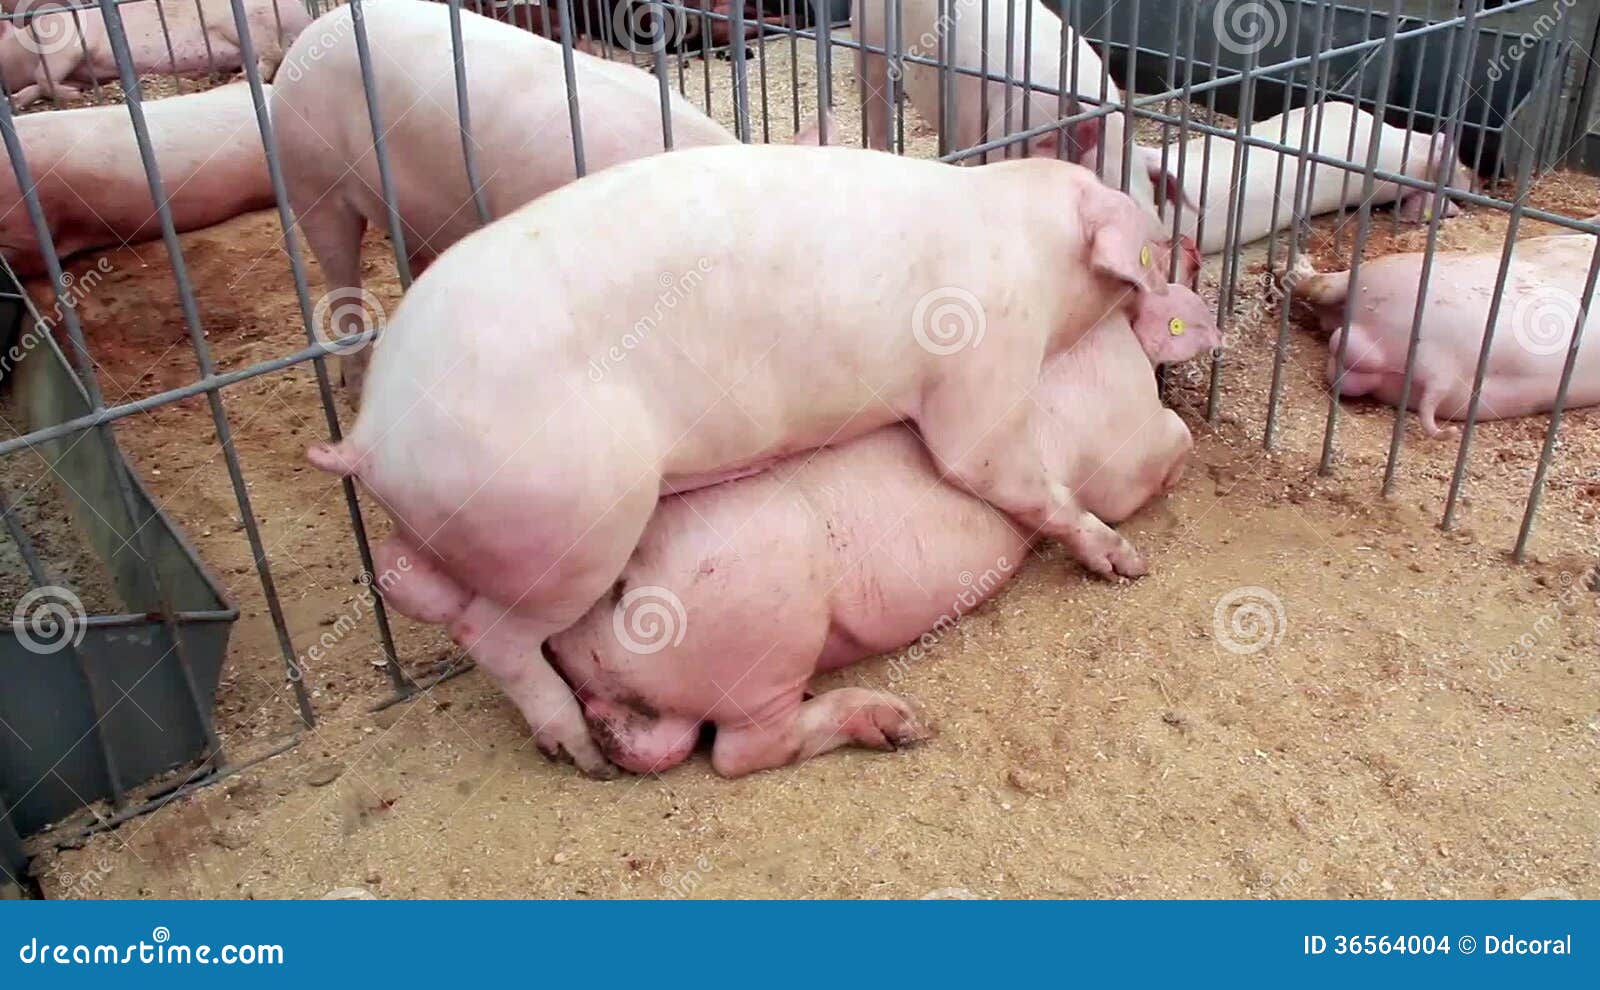 Pig have sex in Salvador